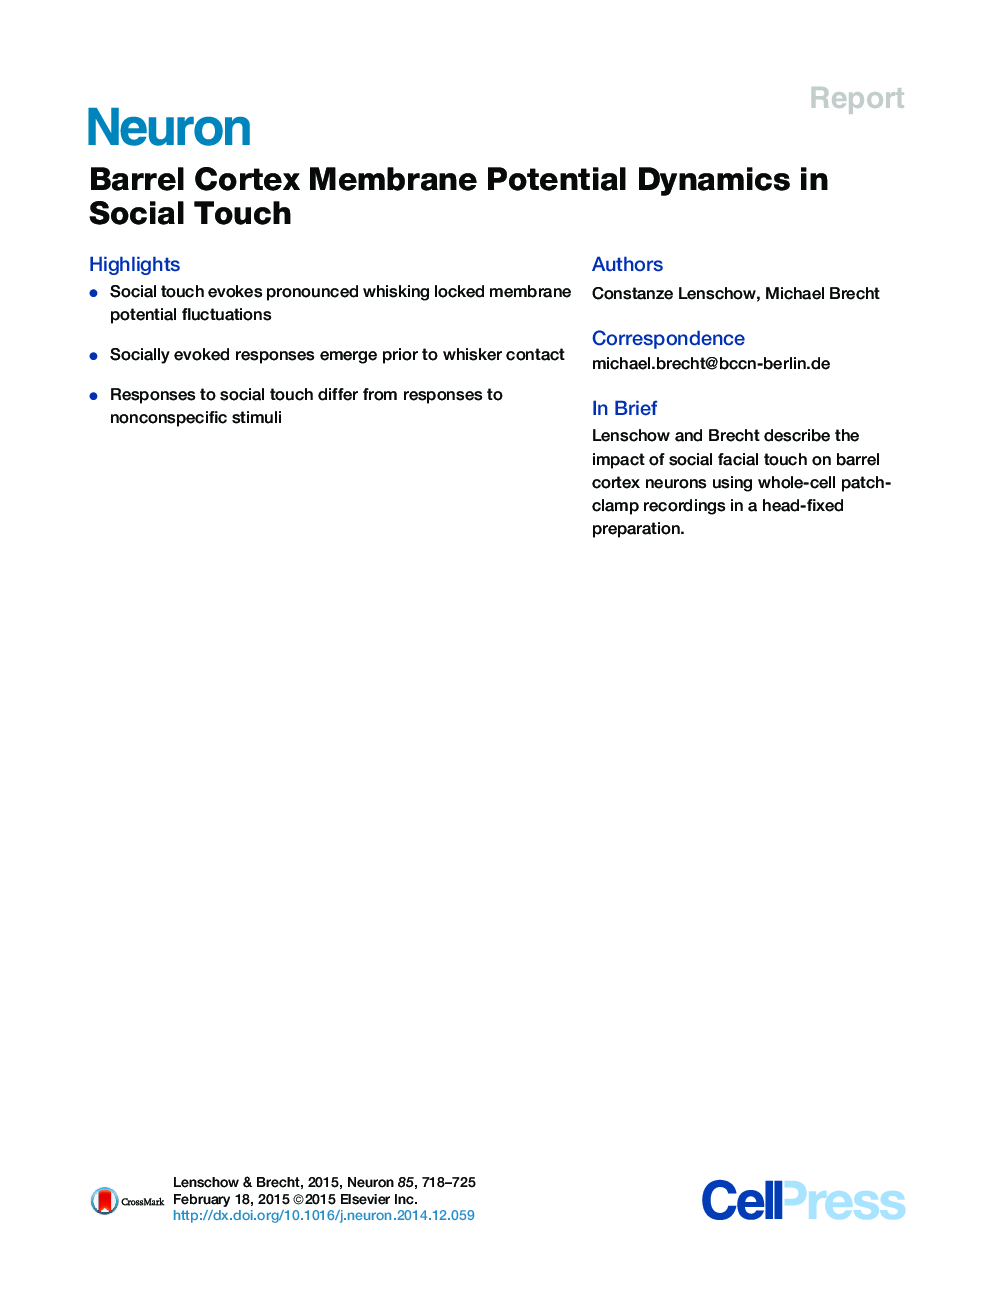 Barrel Cortex Membrane Potential Dynamics in Social Touch